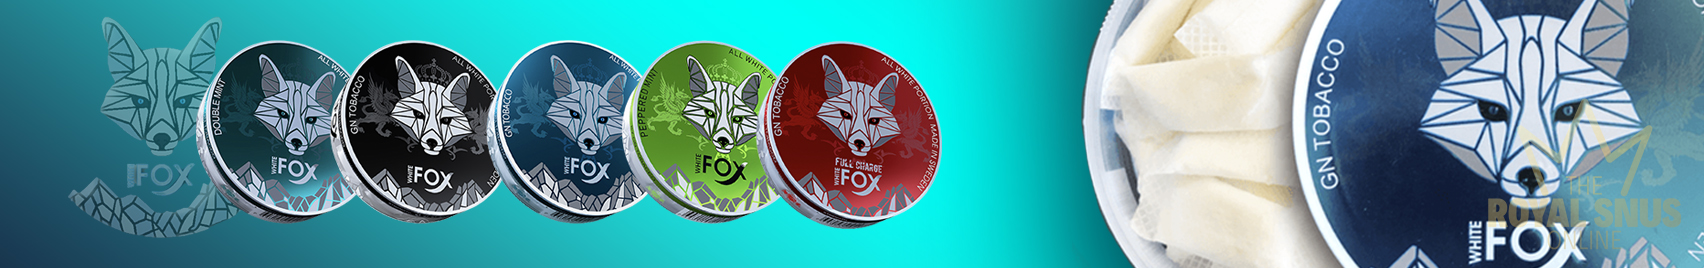 White Fox snus, White Fox nuuska, White Fox nuuskaja, White Fox swedish snus buy online